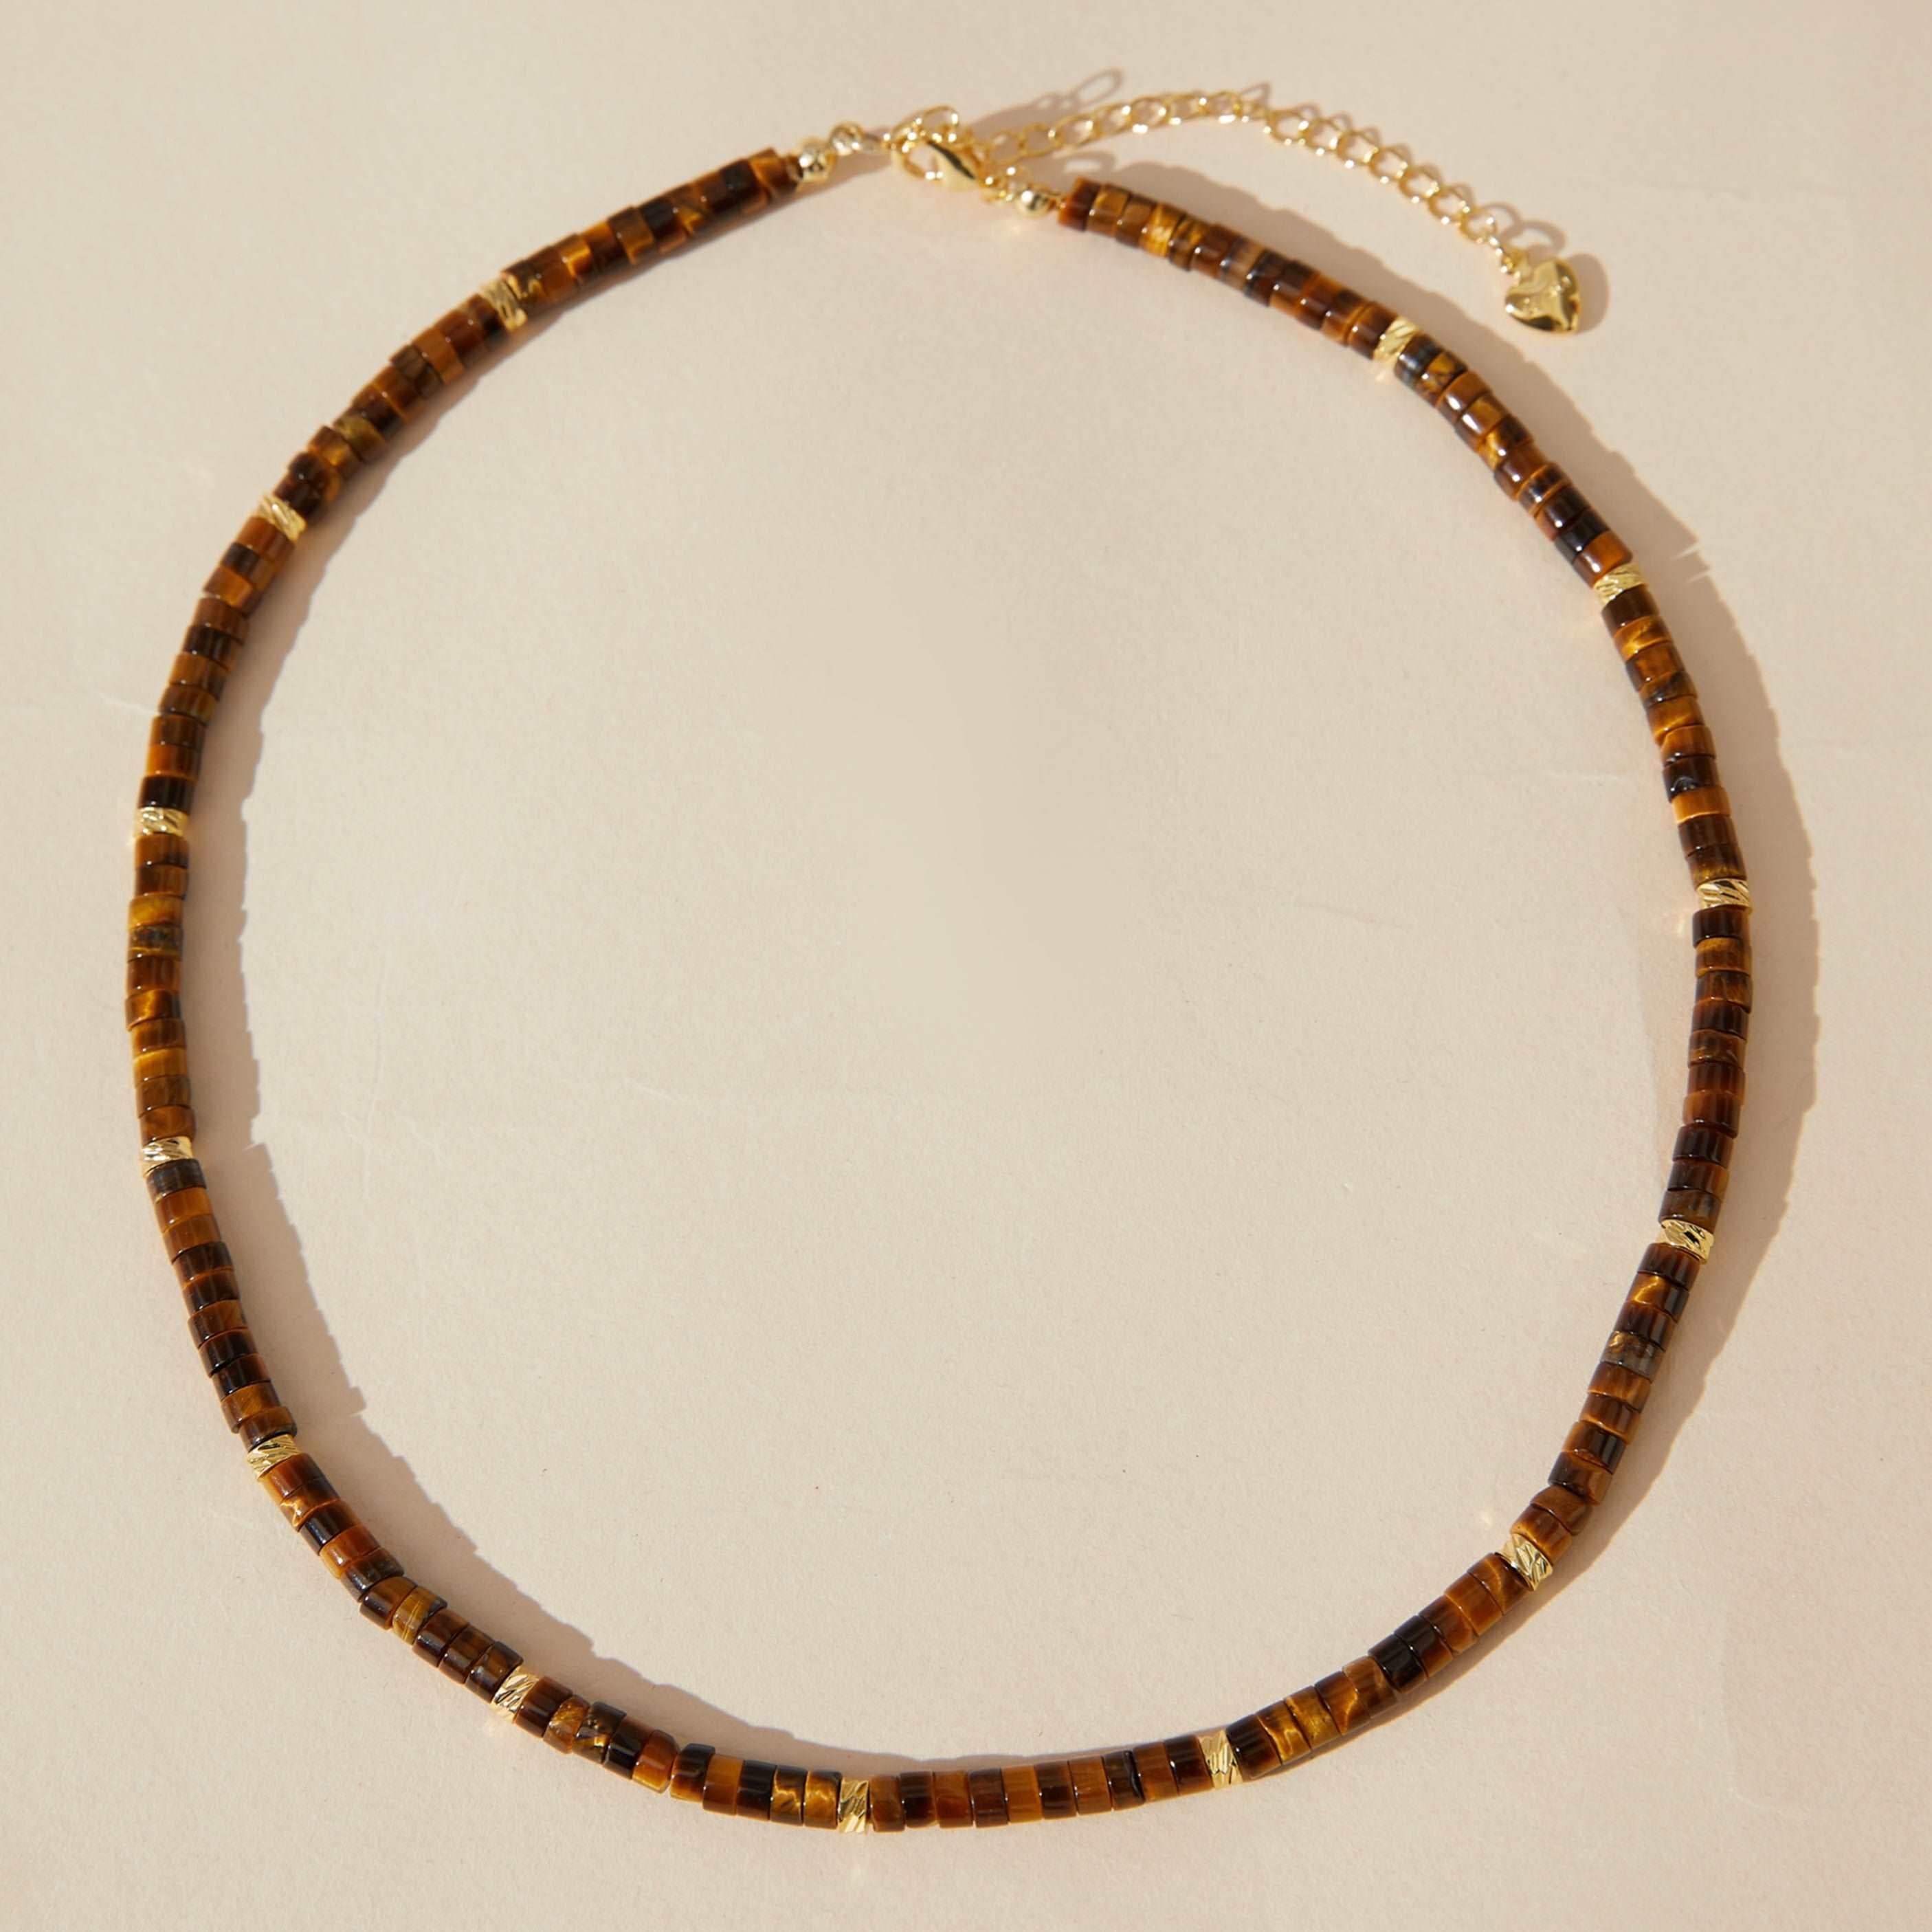 Handmade Tiger's Eye Bead Necklace